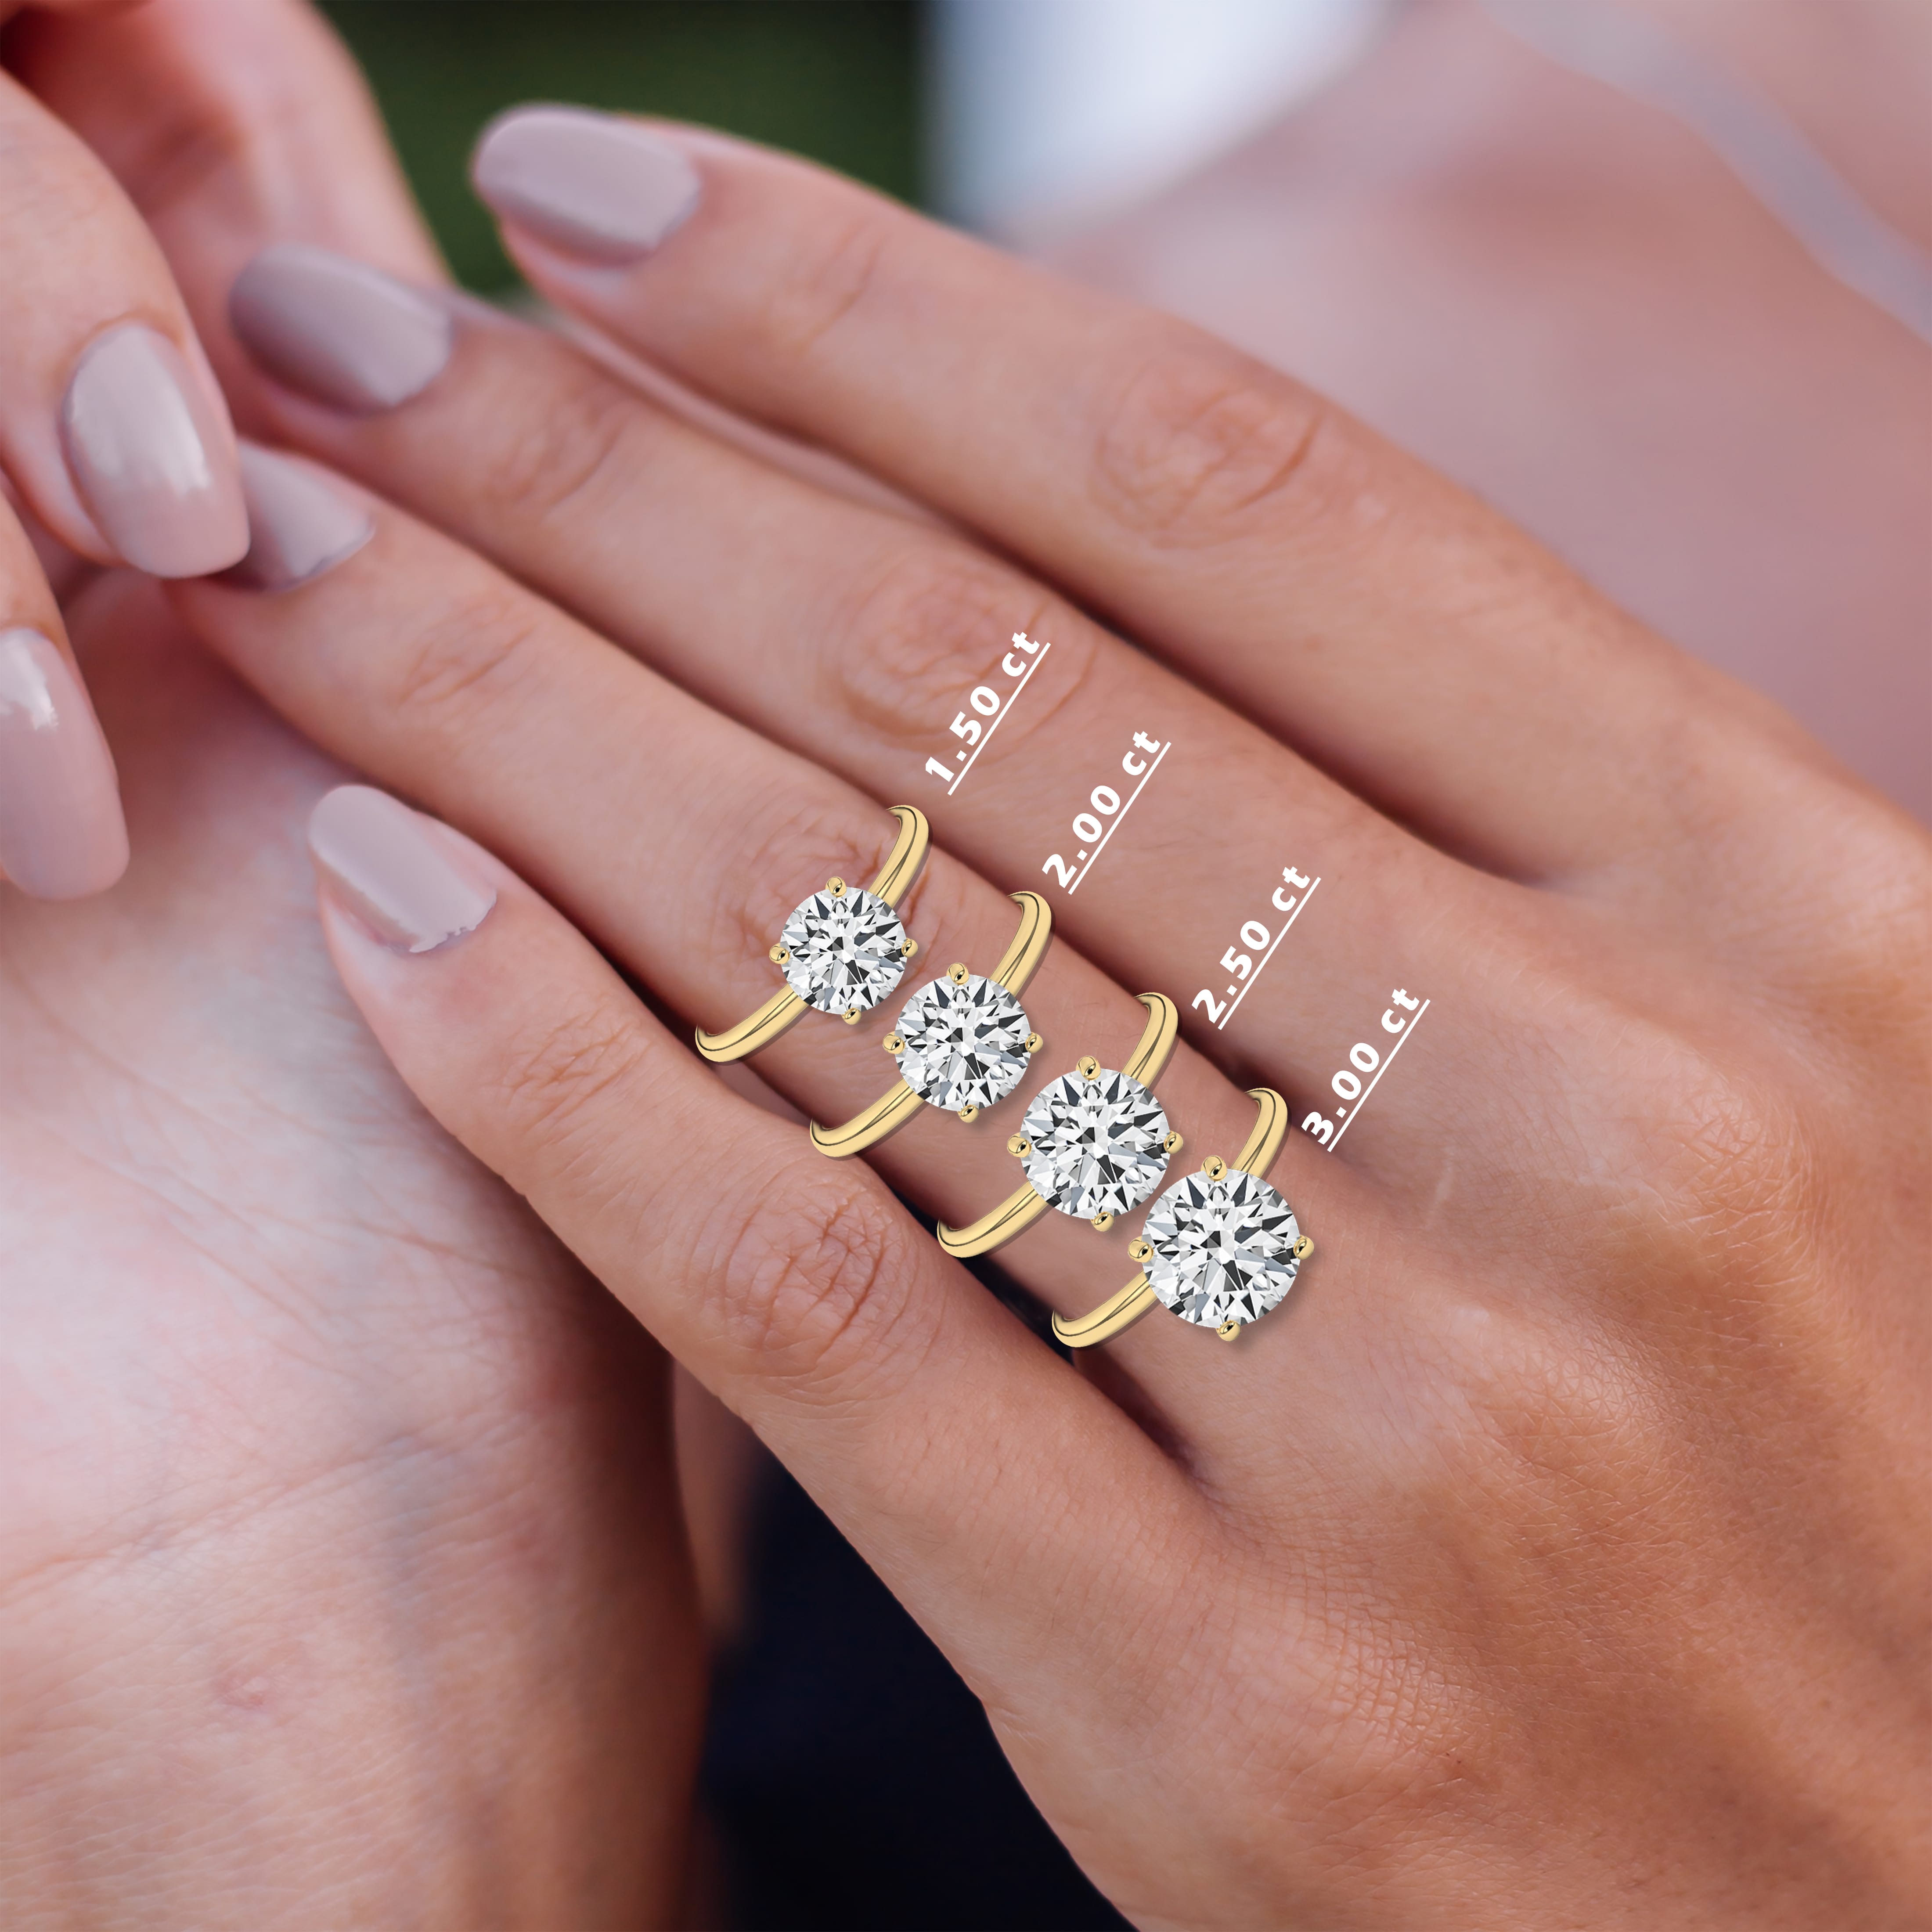 Round cut diamond wedding rings for women